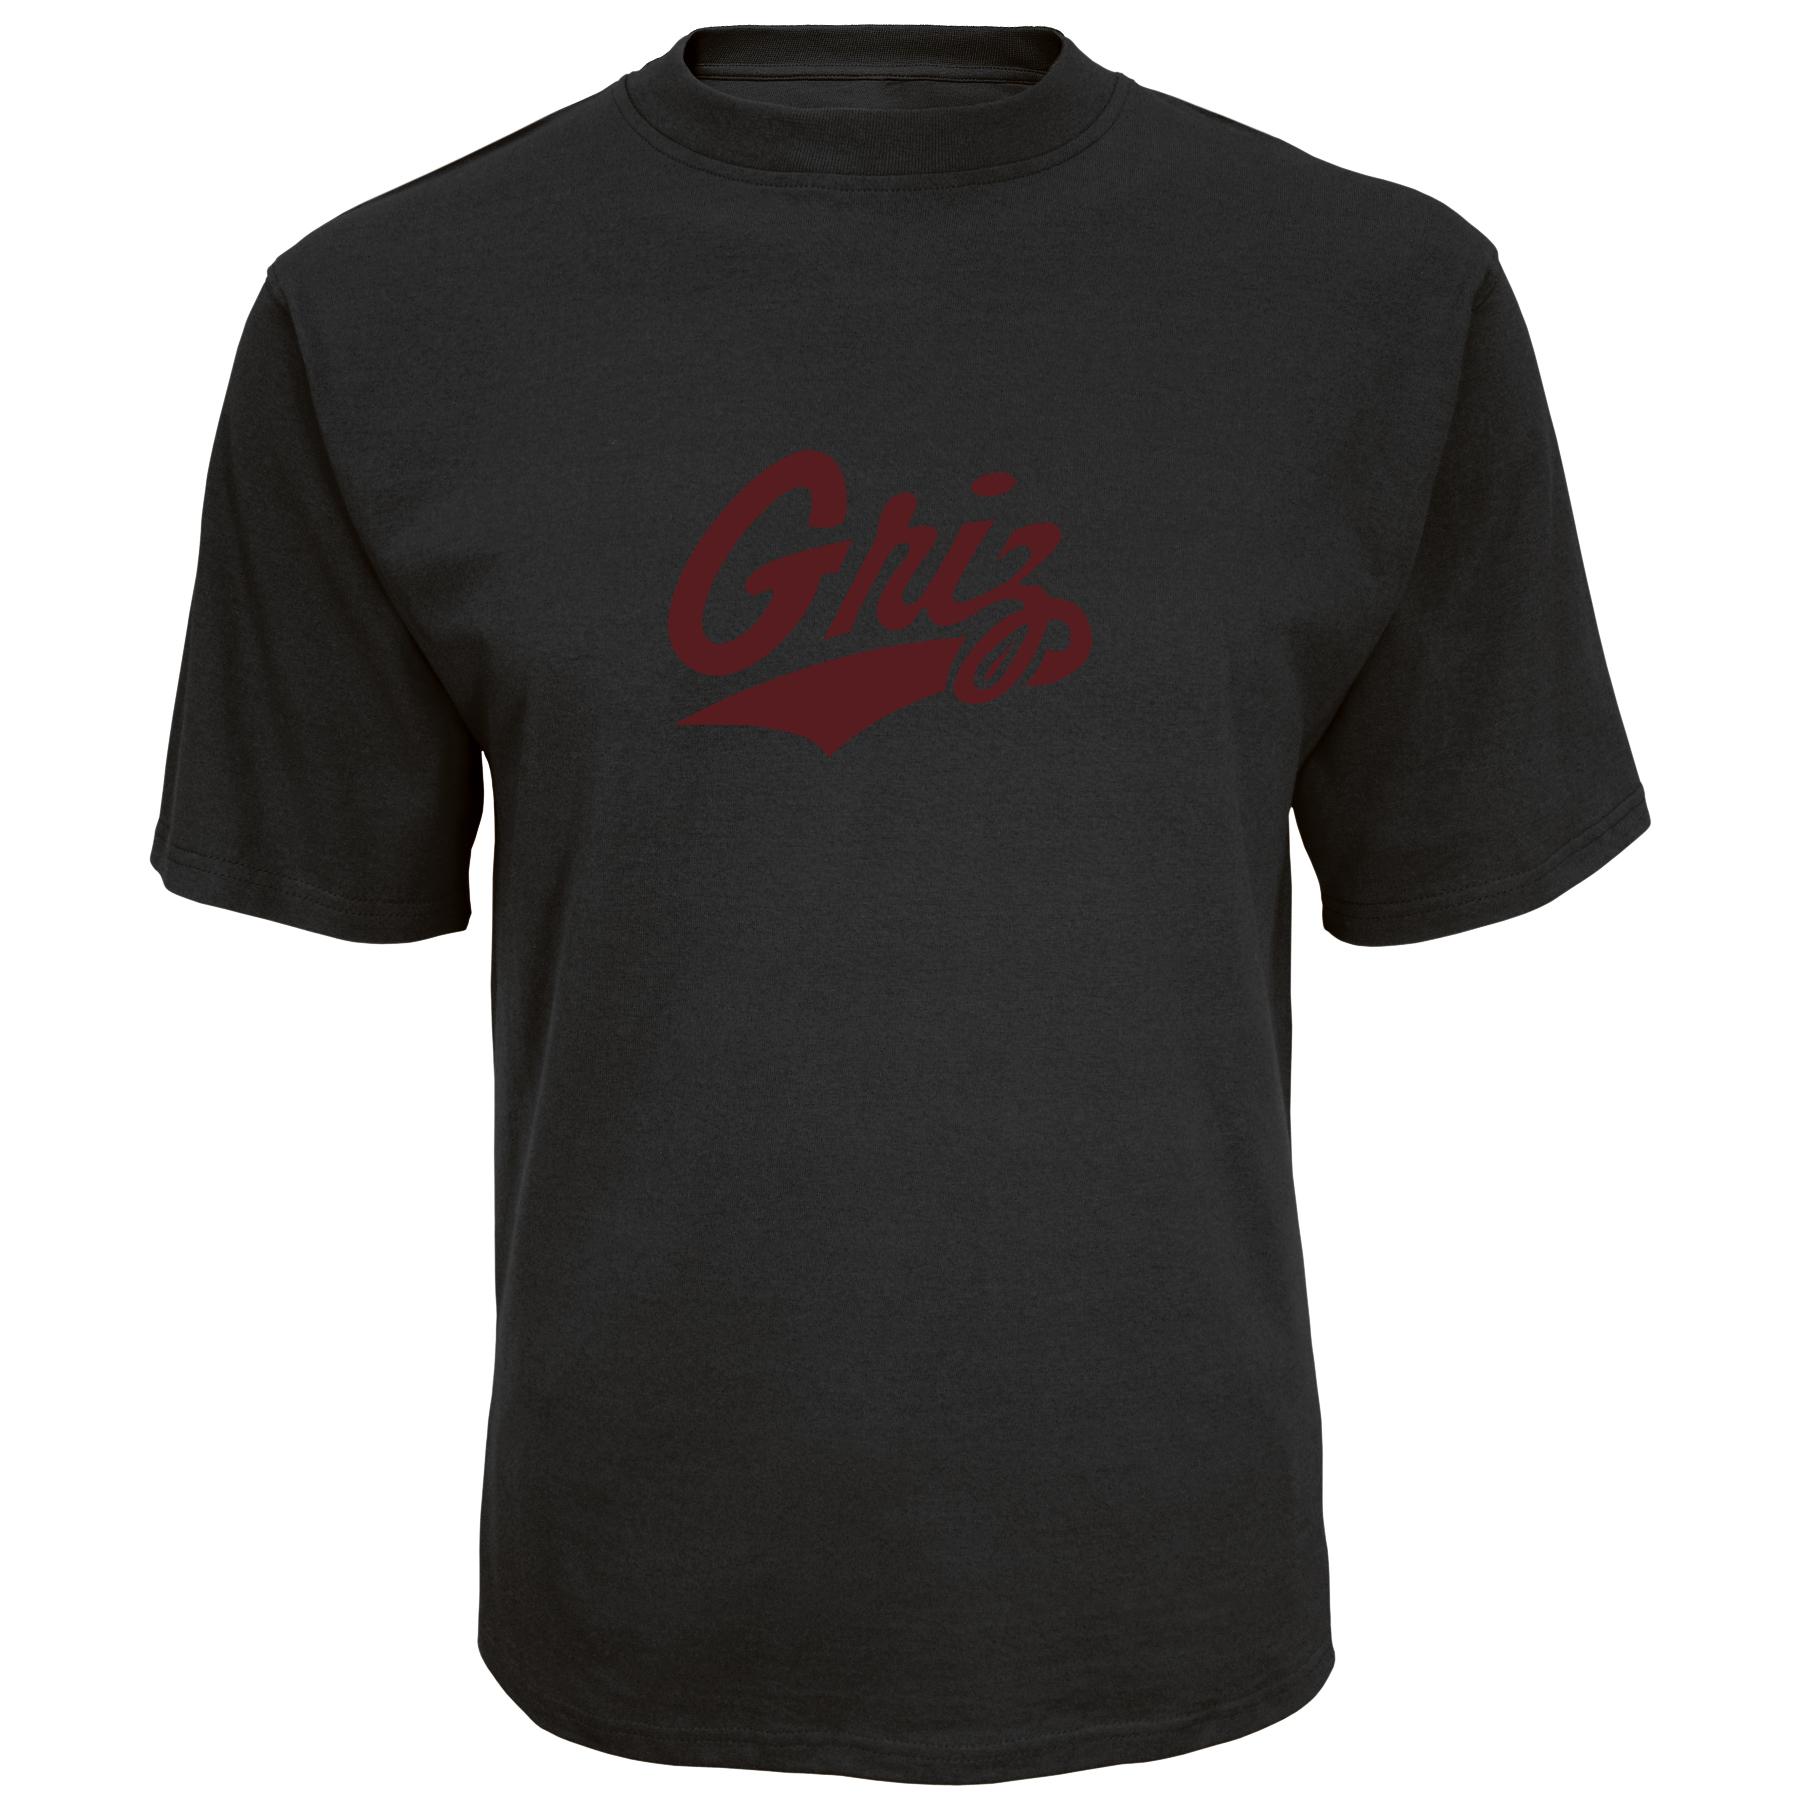 NCAA Men's Graphic T-Shirt - Montana Grizzlies